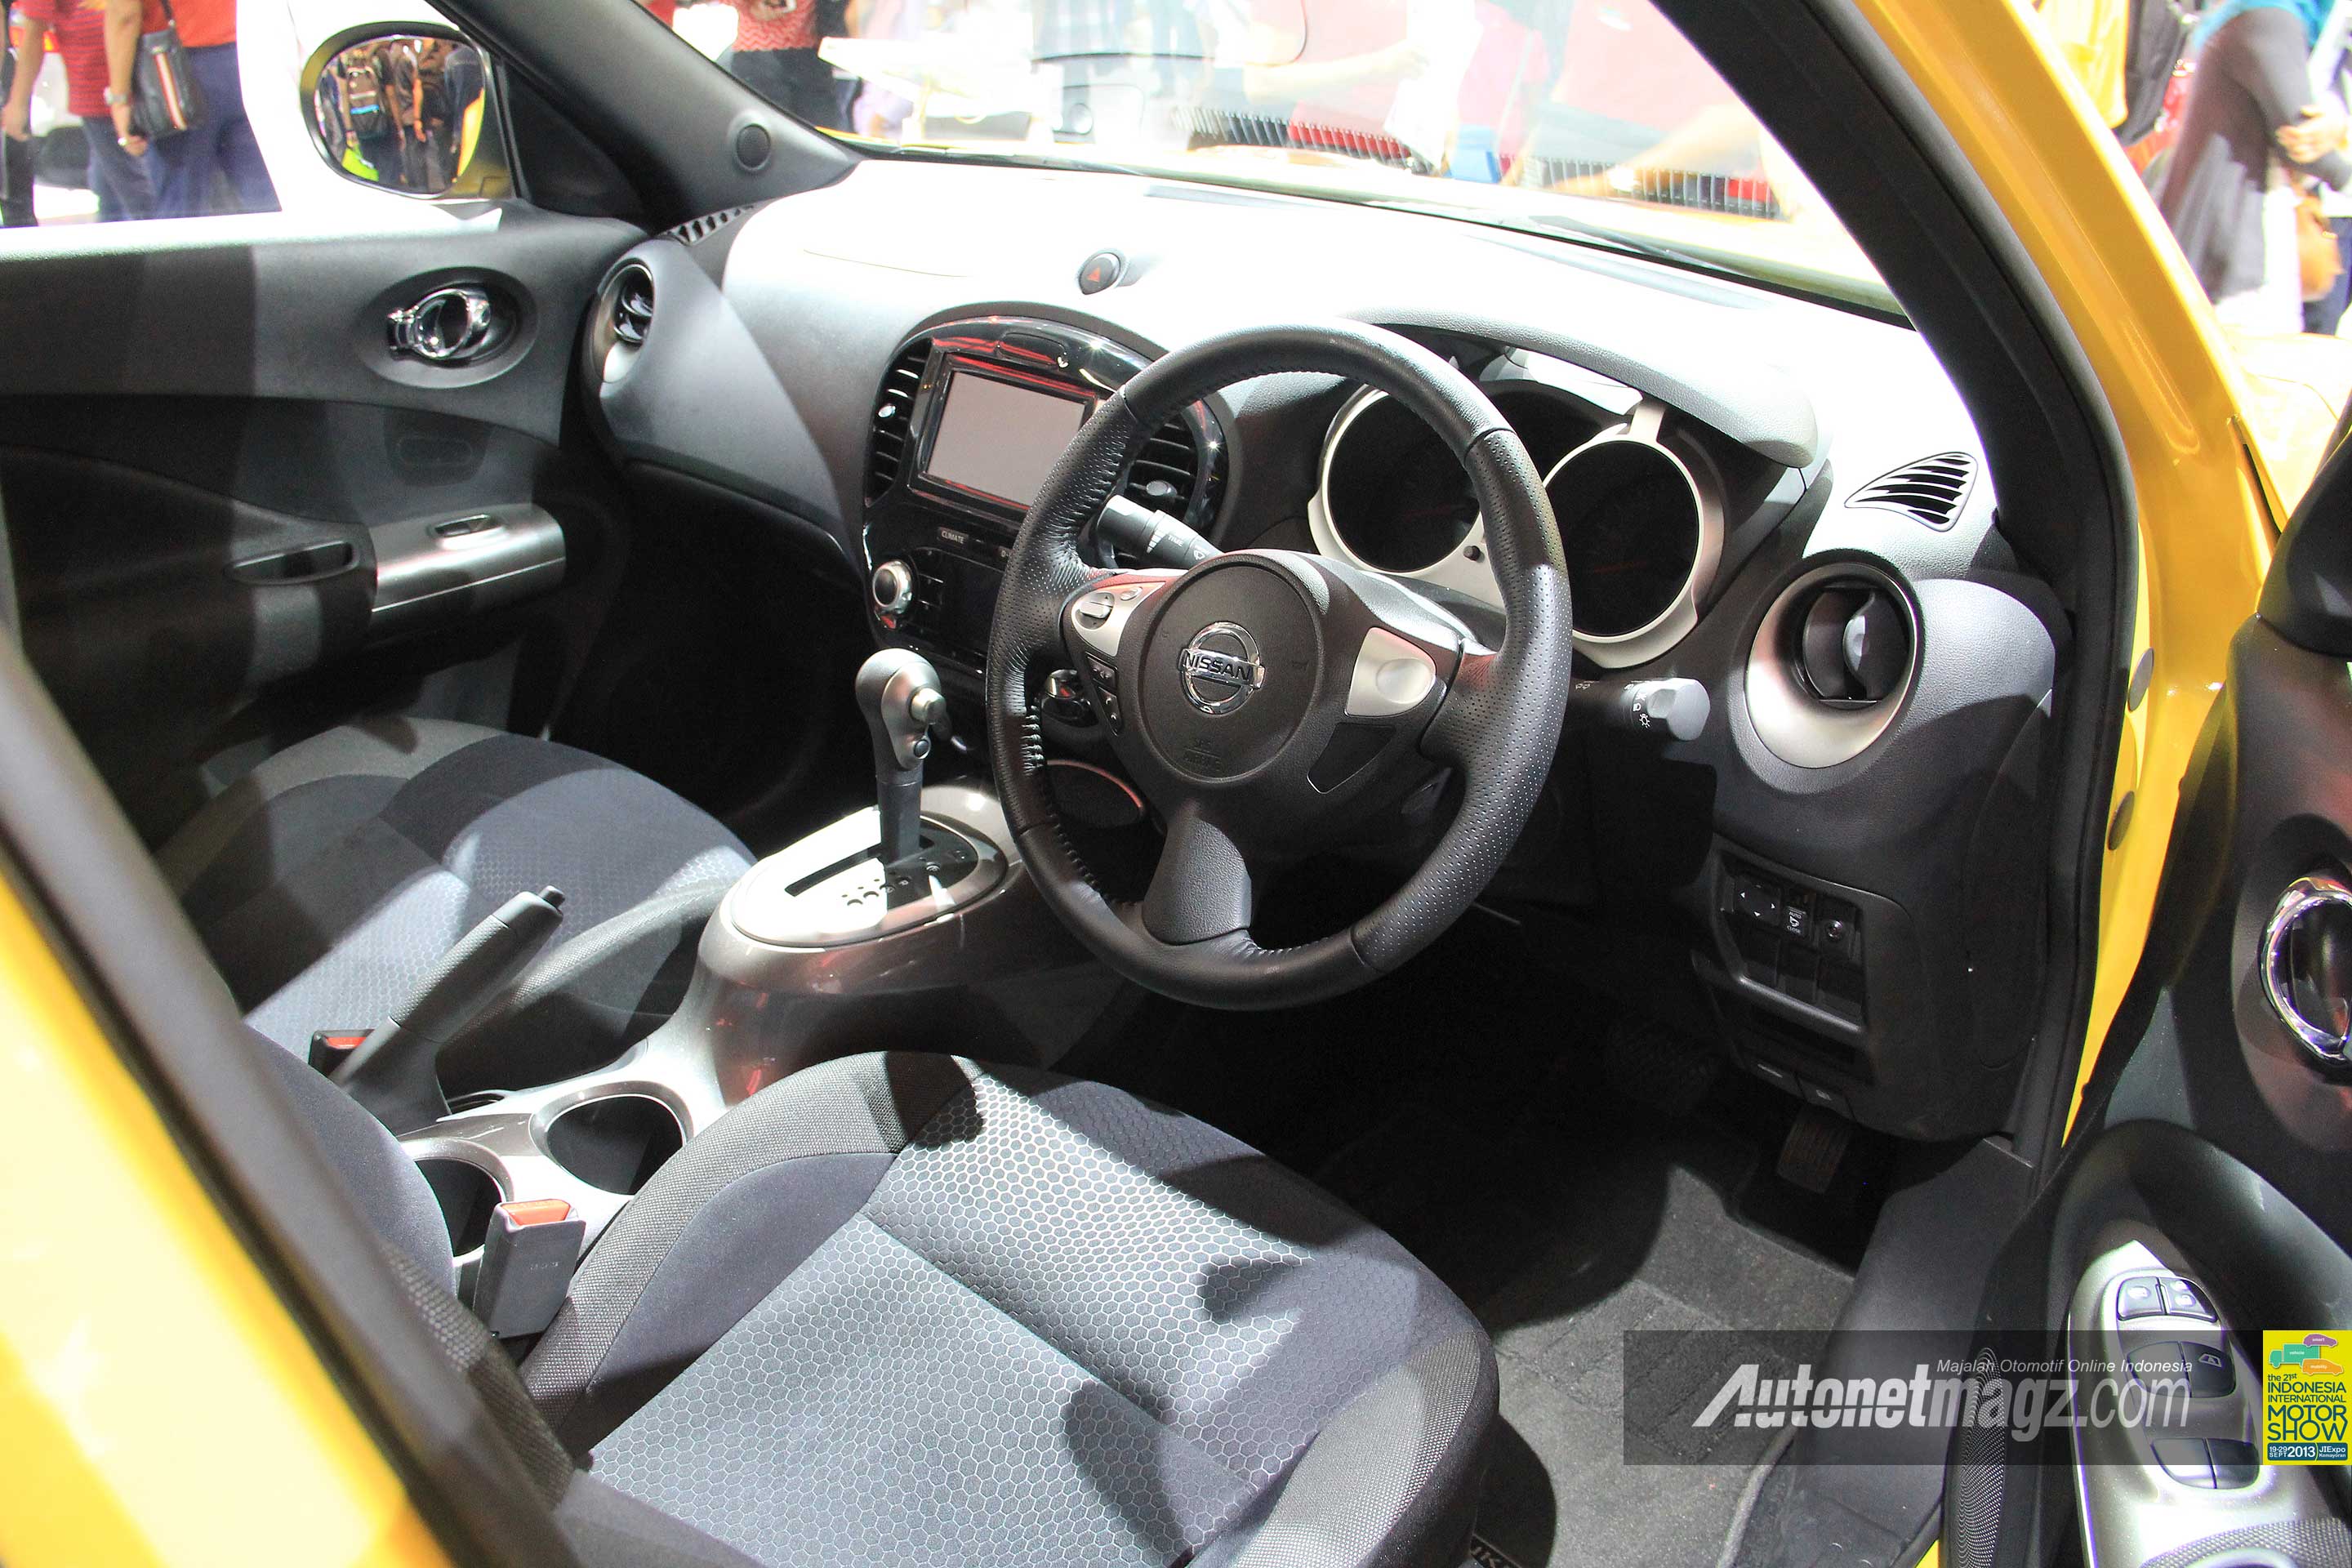 2013 New Nissan  Juke  interior  AutonetMagz Review 